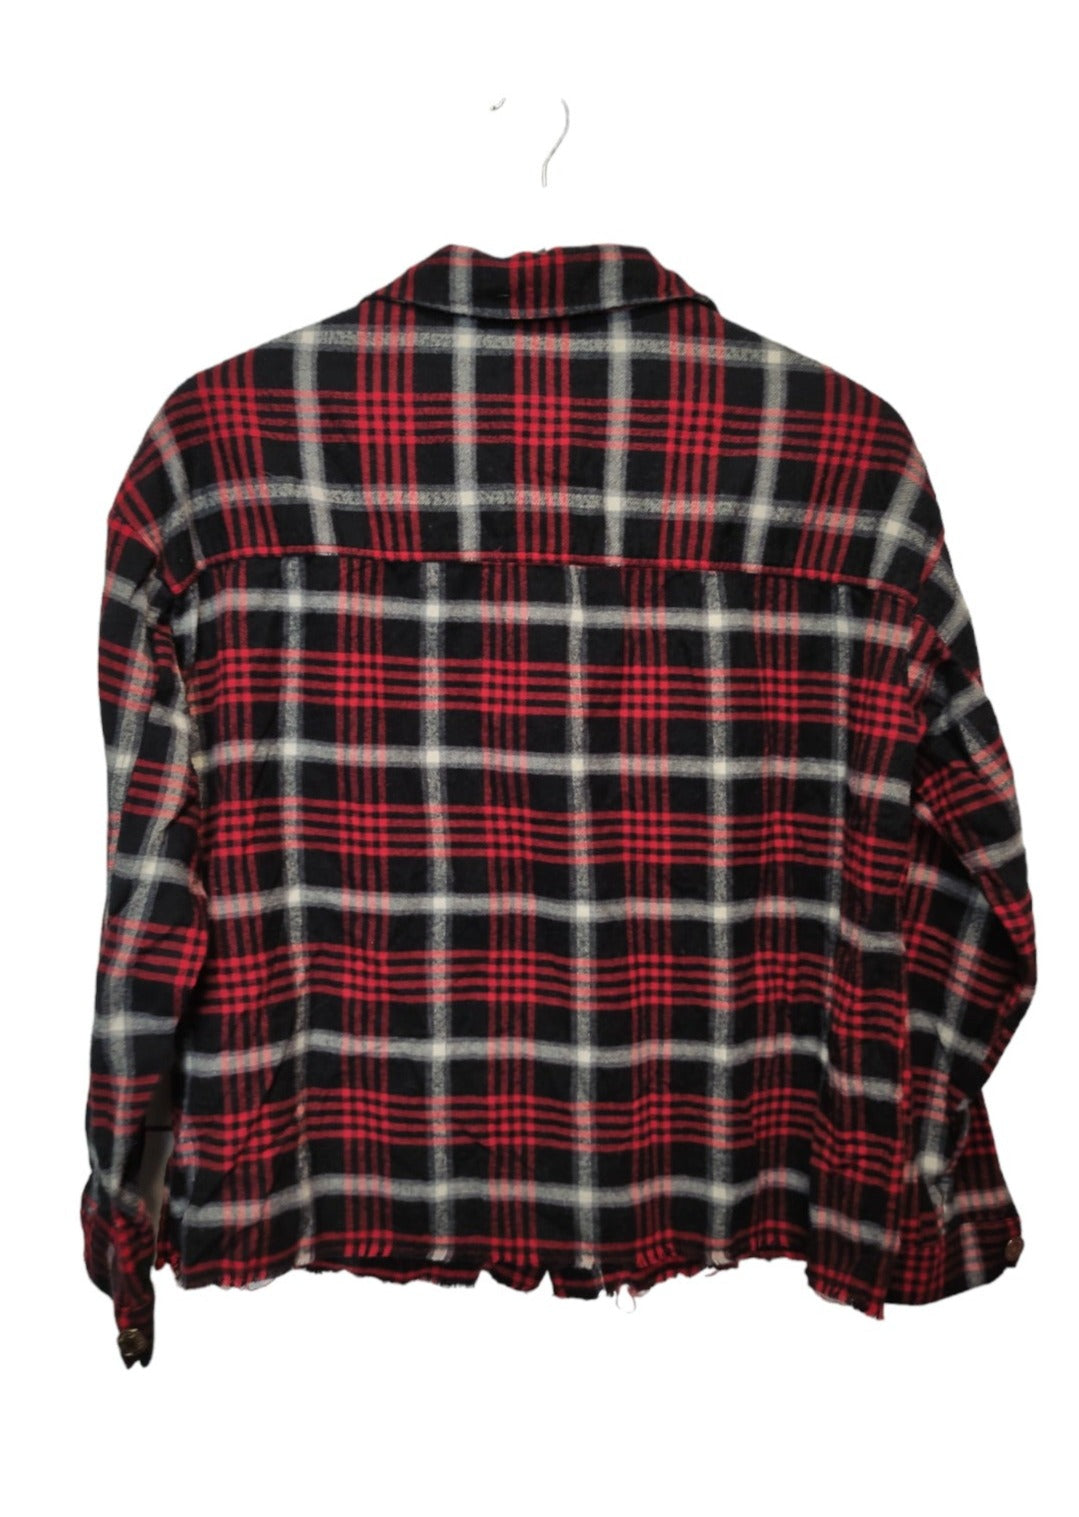 Top Branded, Ενισχυμένο, Καρό Γυναικείο Πουκάμισο - Flannel σε Κόκκινο-Μαύρο χρώμα (S/M)